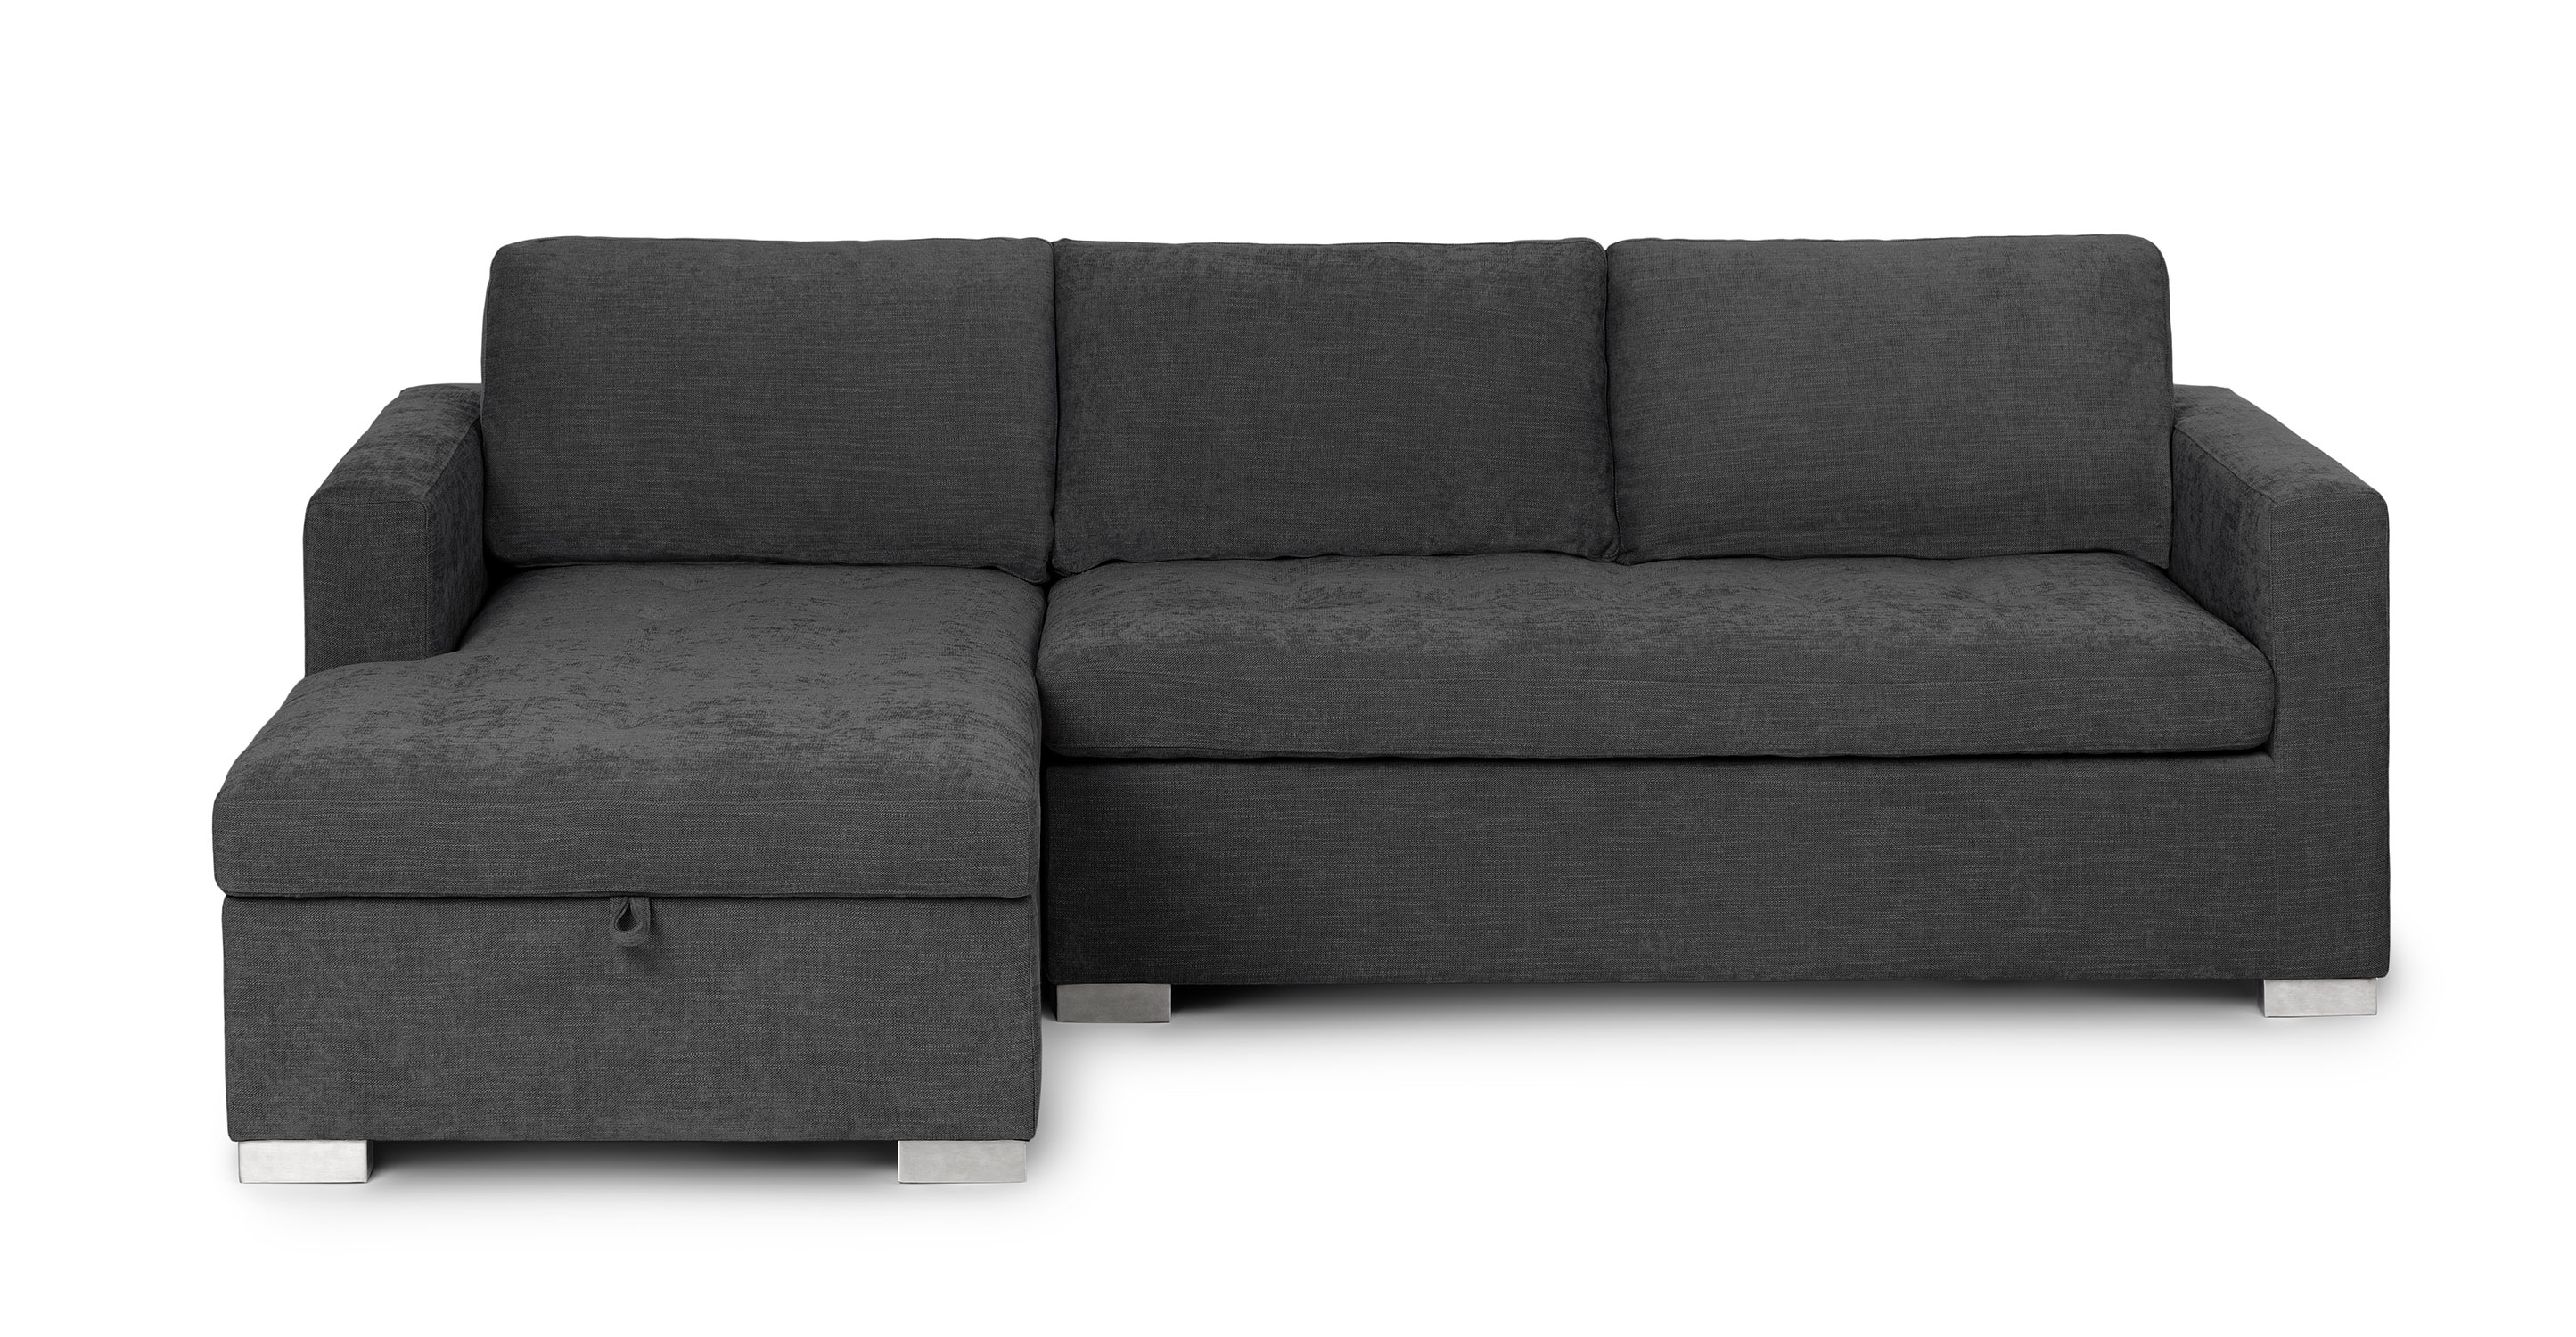 ccv sofa bed review